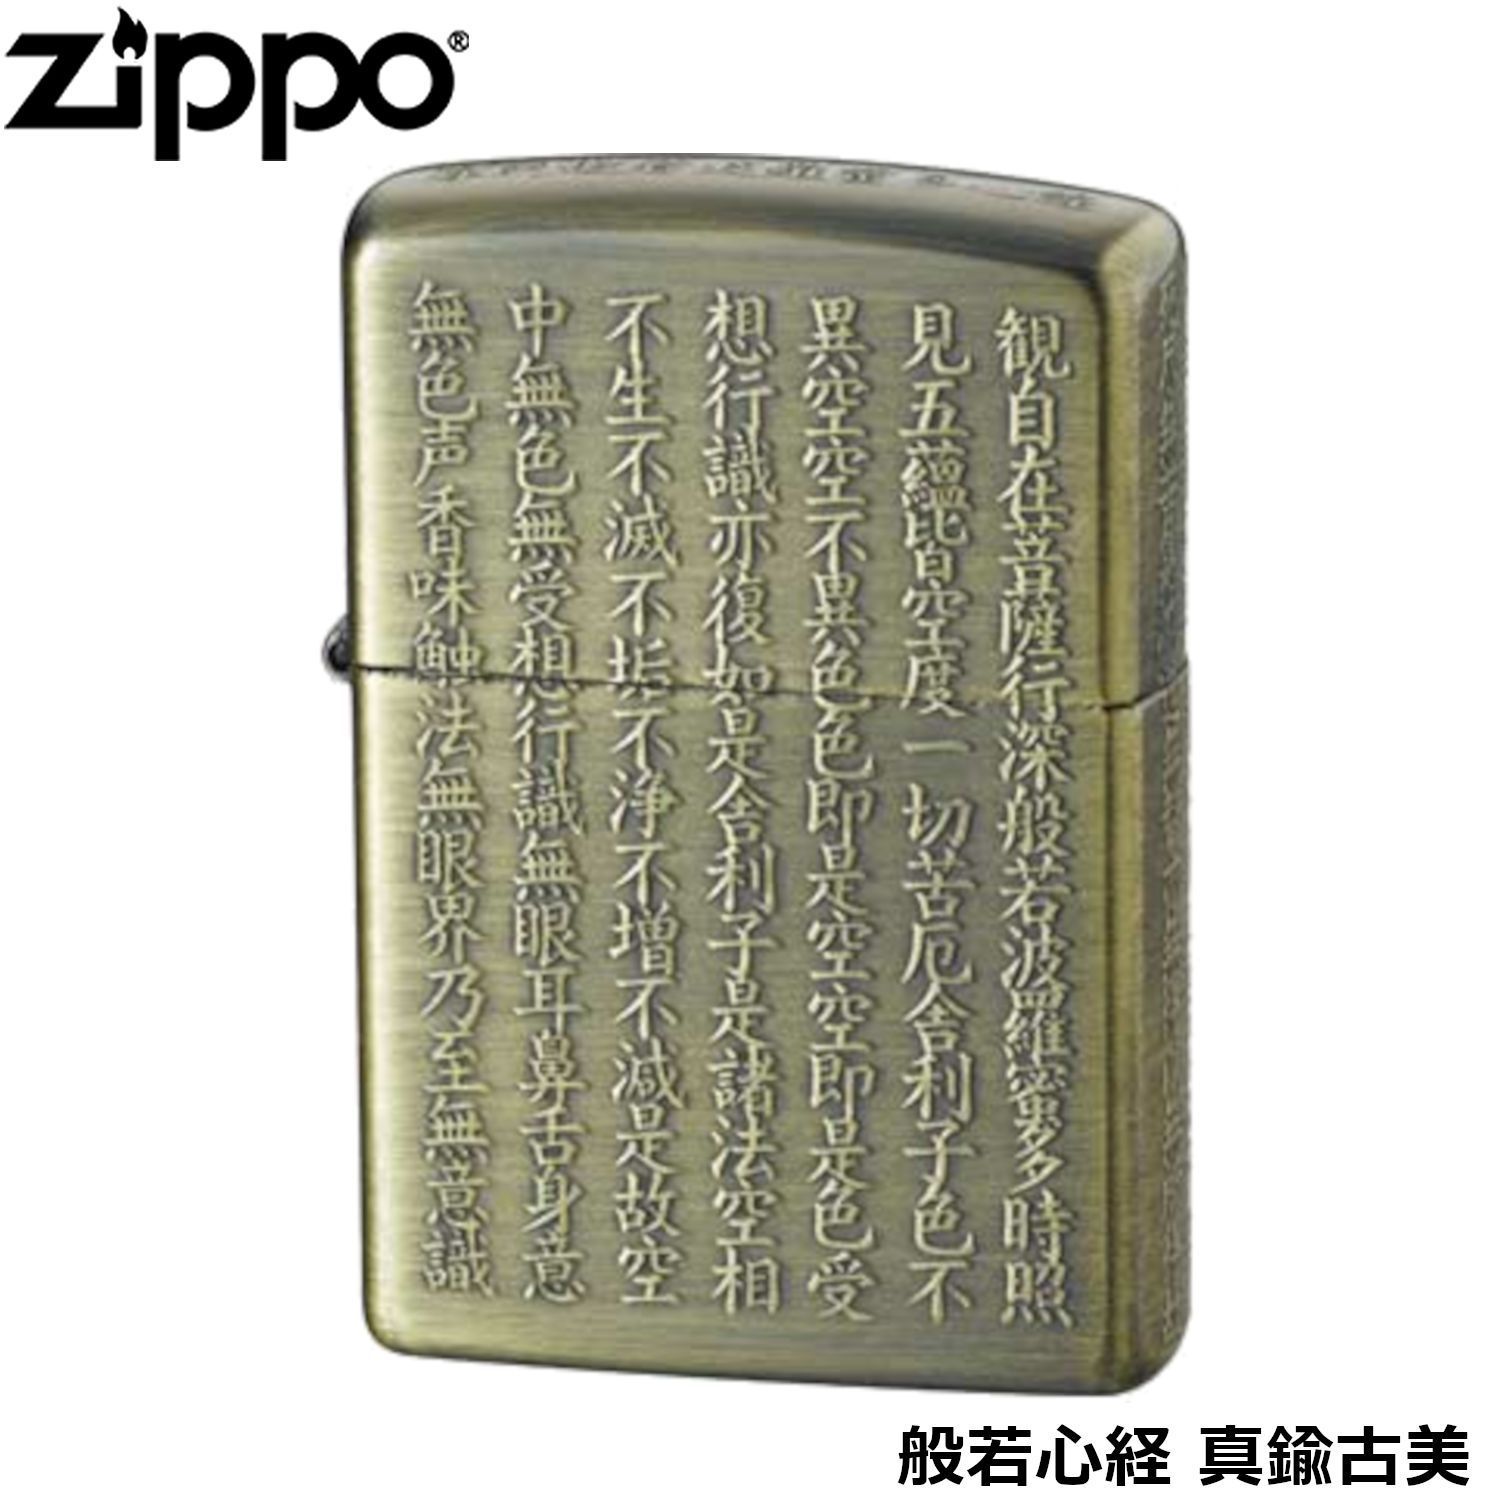 zippoライター - 喫煙具・ライター